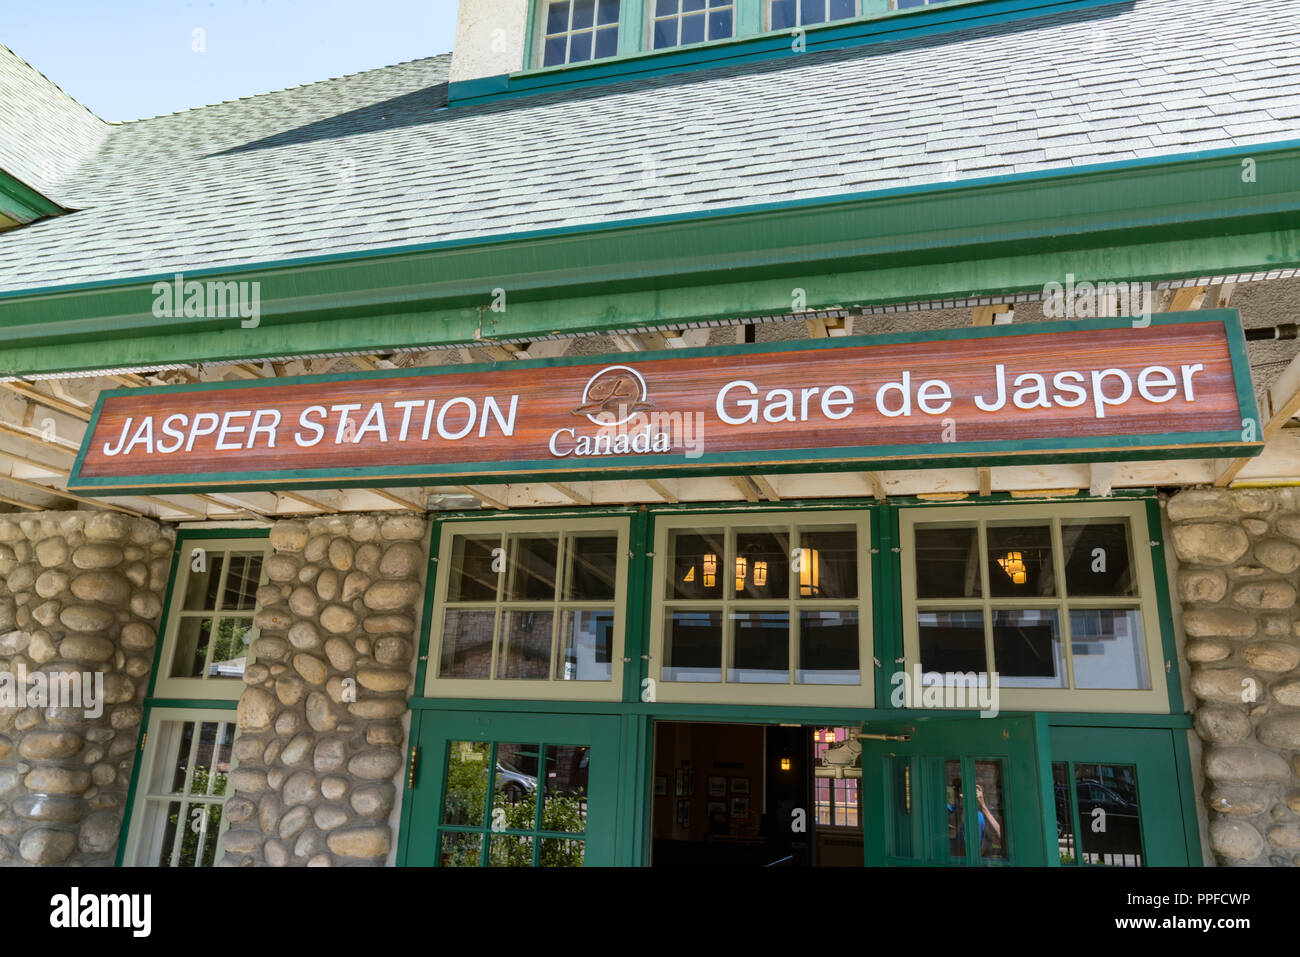 JASPER, CANADA - JULY 5, 2018: Entrance sign at the Jasper train station in Jasper, Alberta, Canada Stock Photo